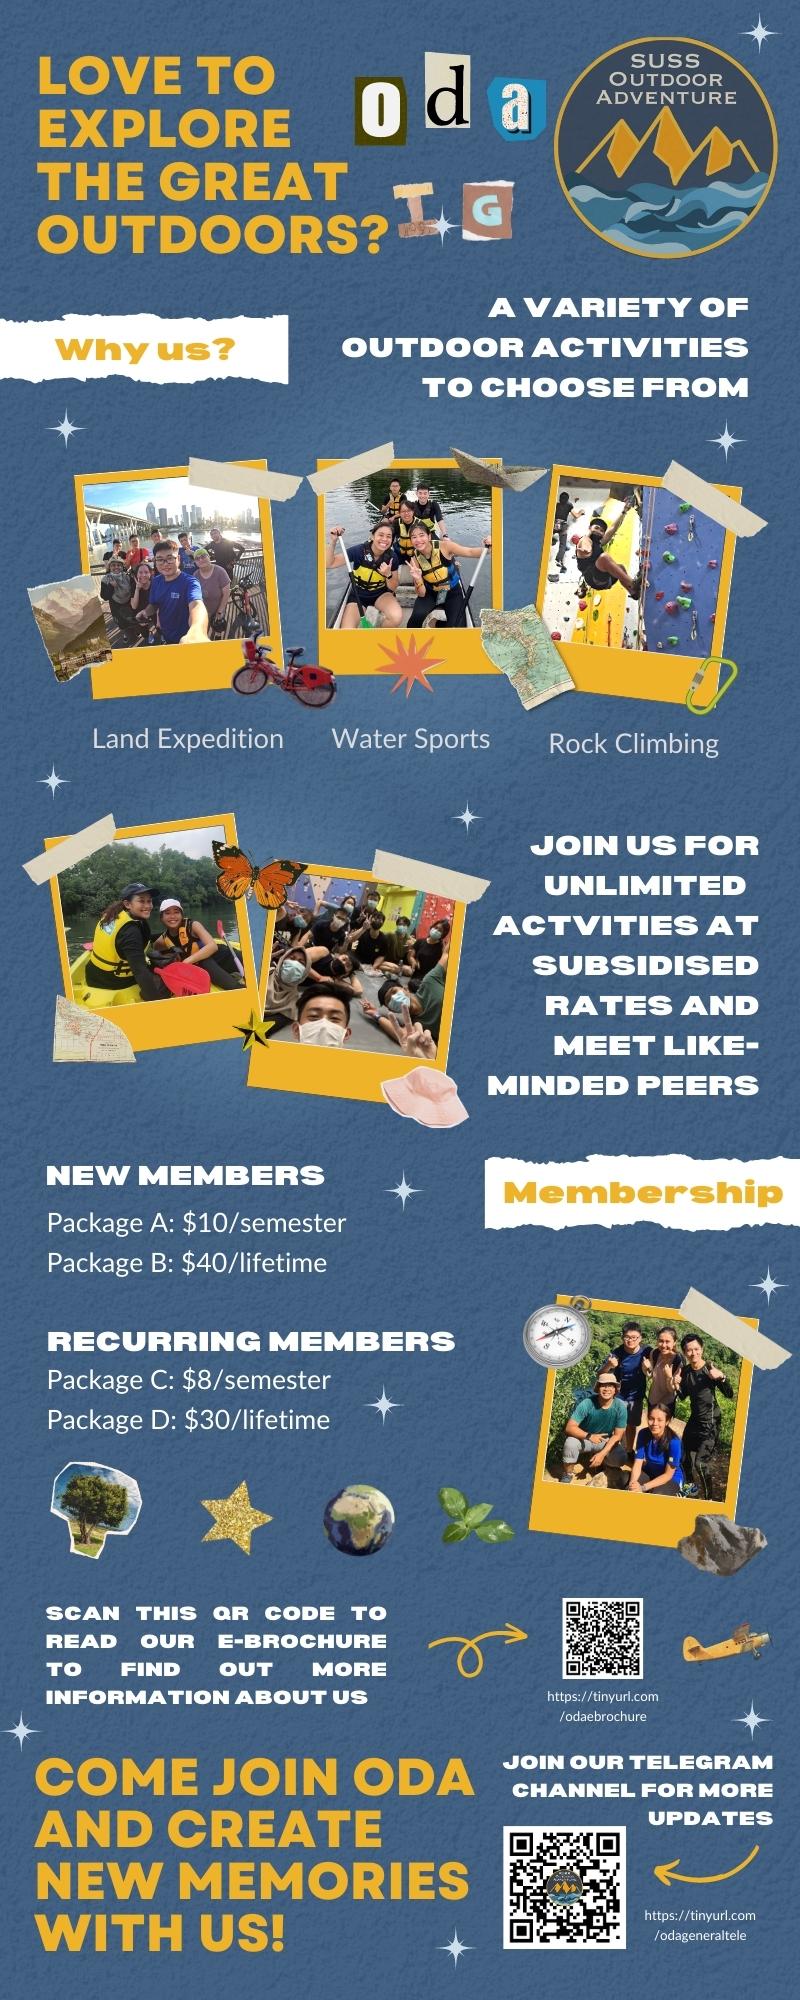 Outdoor Adventure Club Interest Group (ODAIG)